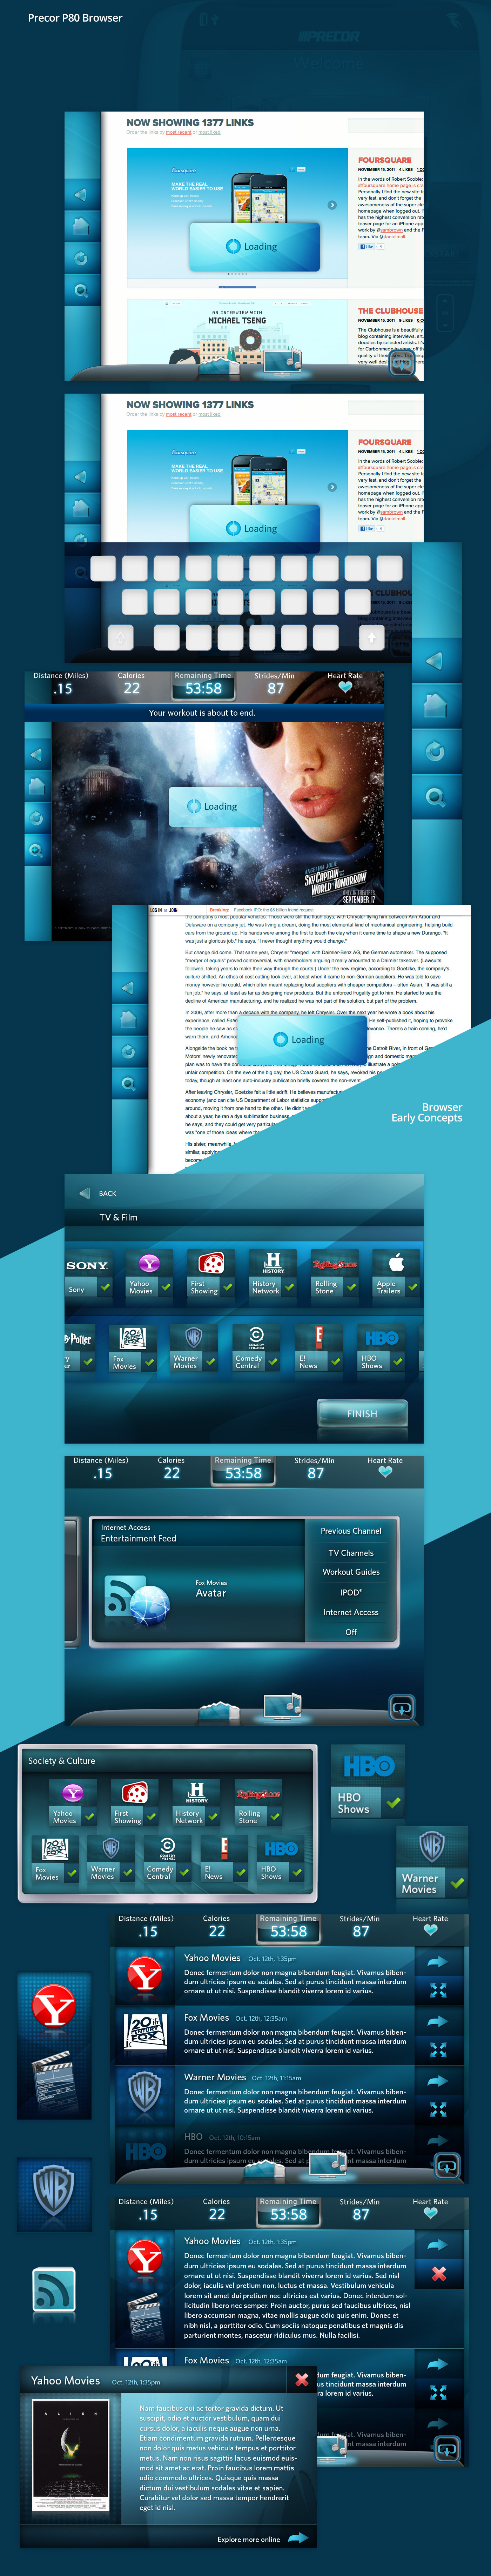 browser feeds RSS Web interactive Interface UI ux touchscreen application app mobile Socialmedia social